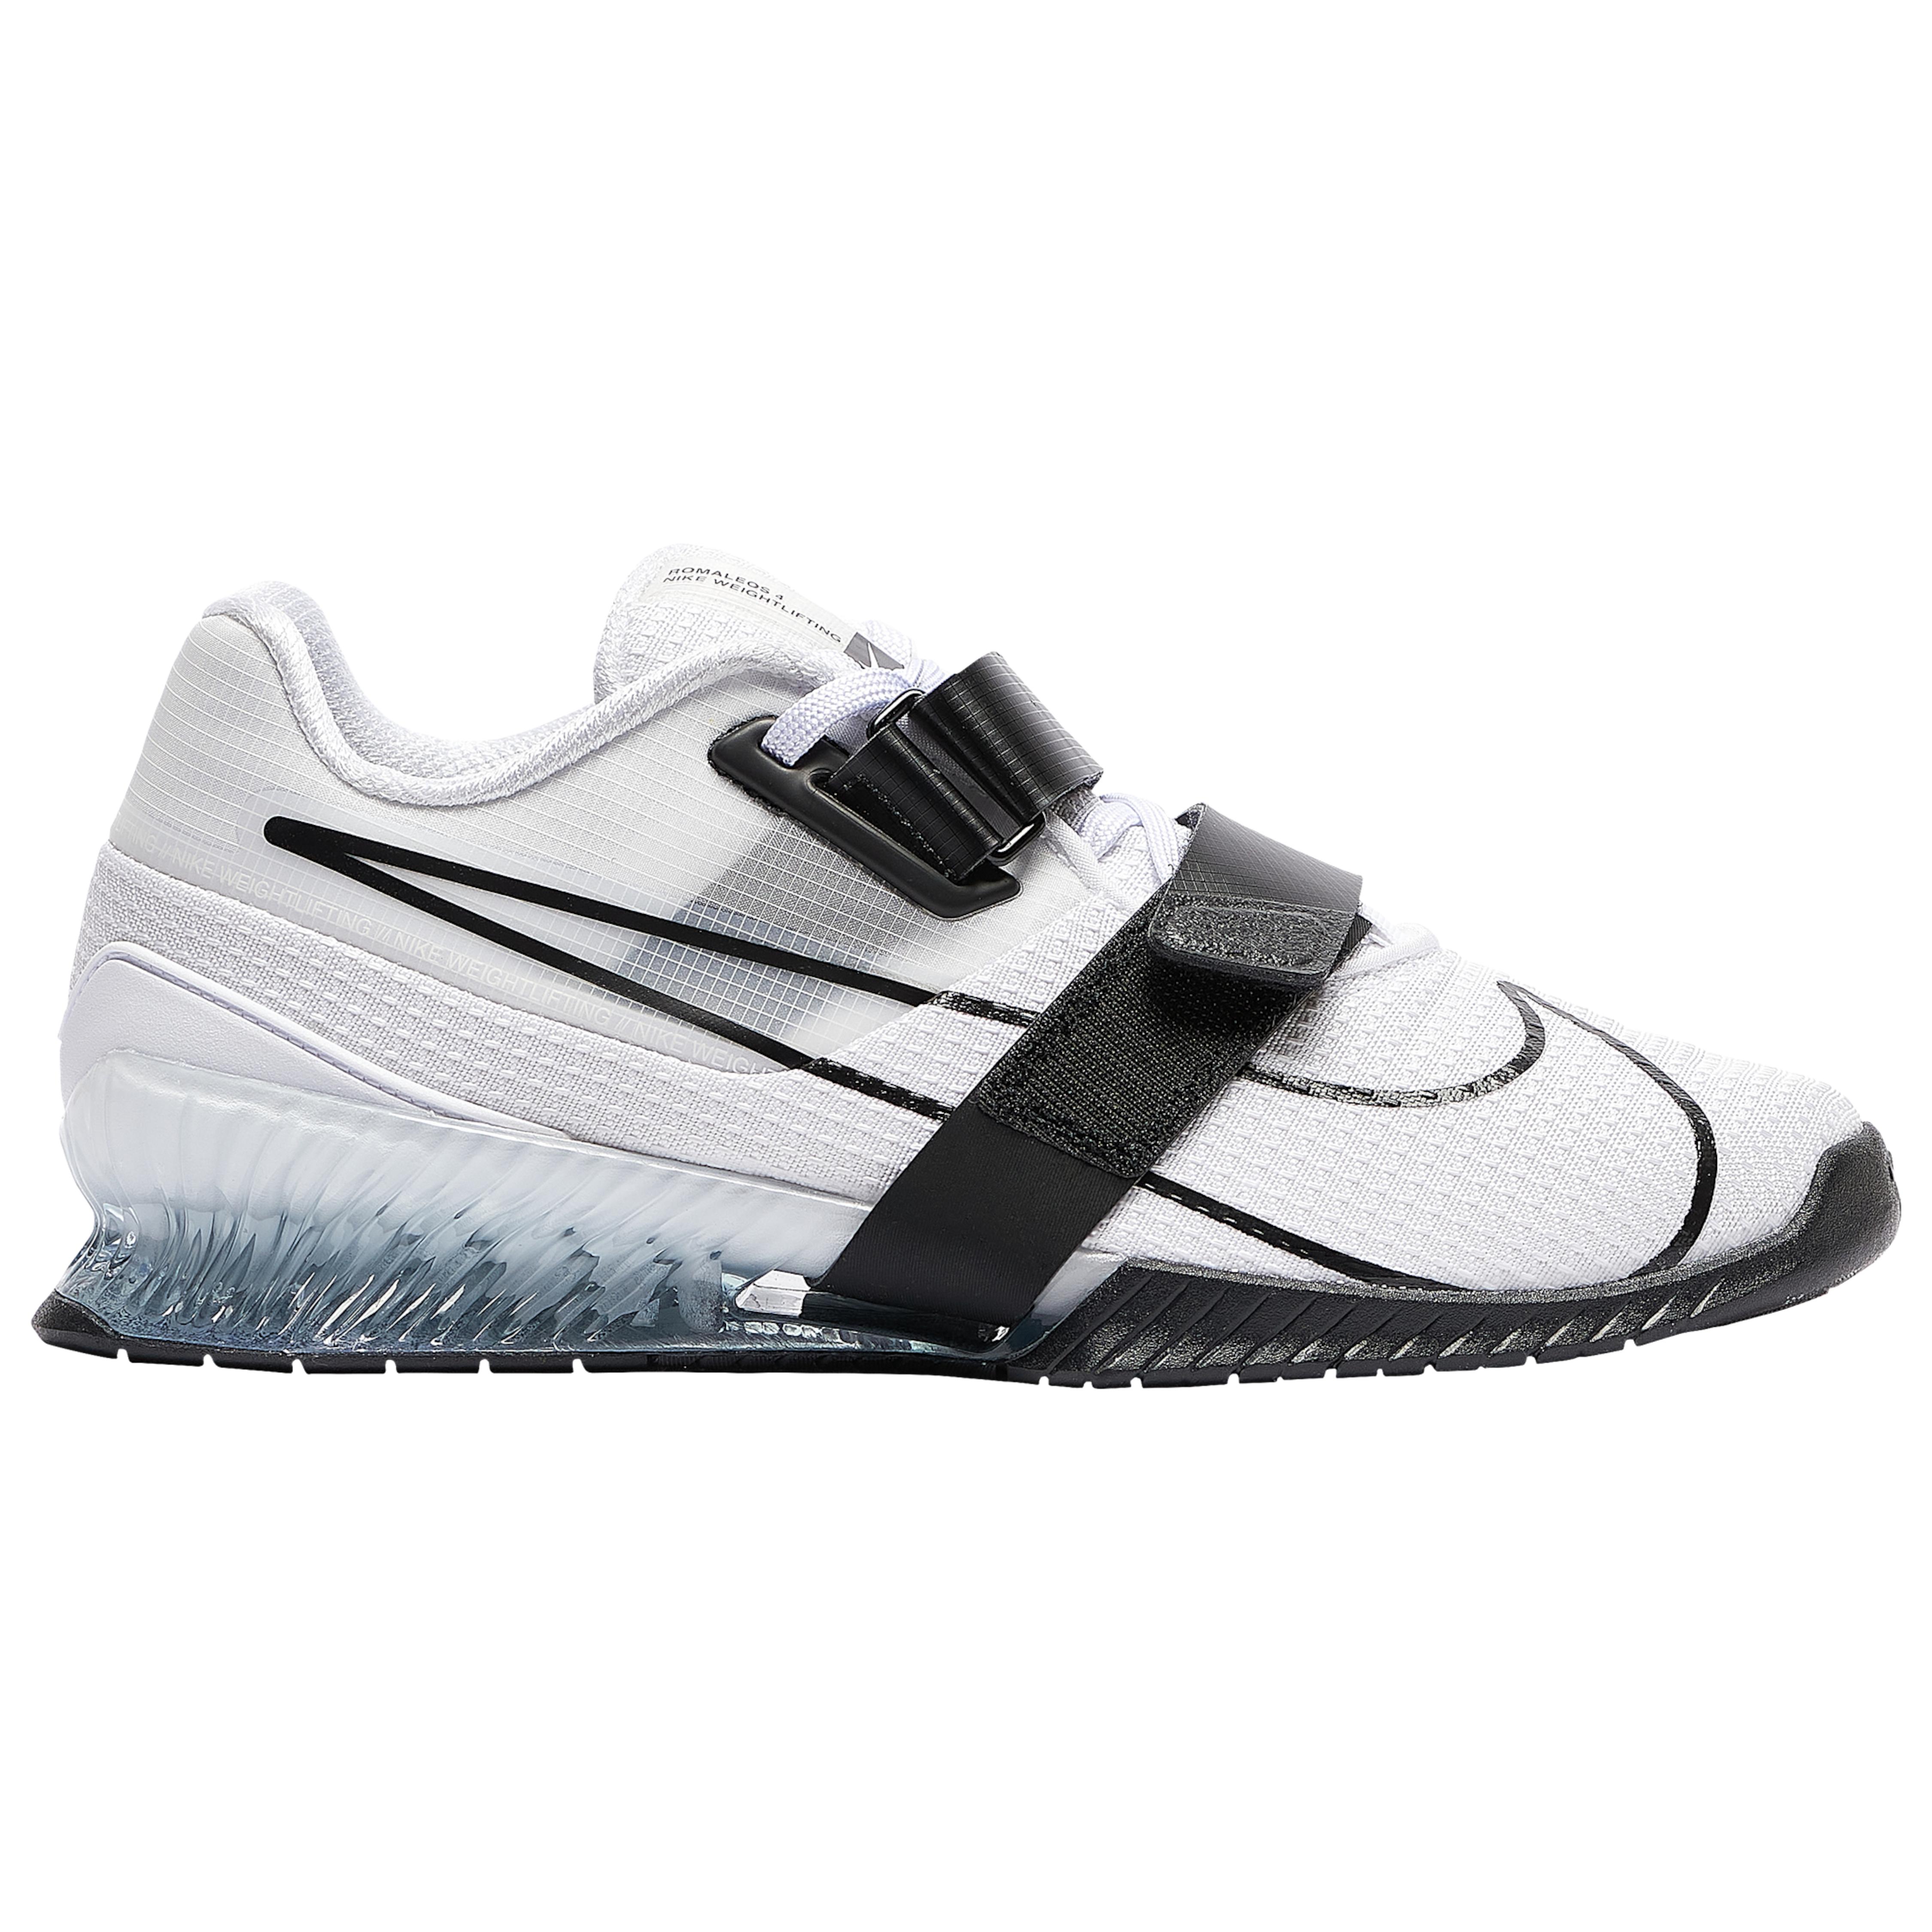 Nike Romaleos 4 in White/Black/White (White) for Men - Lyst